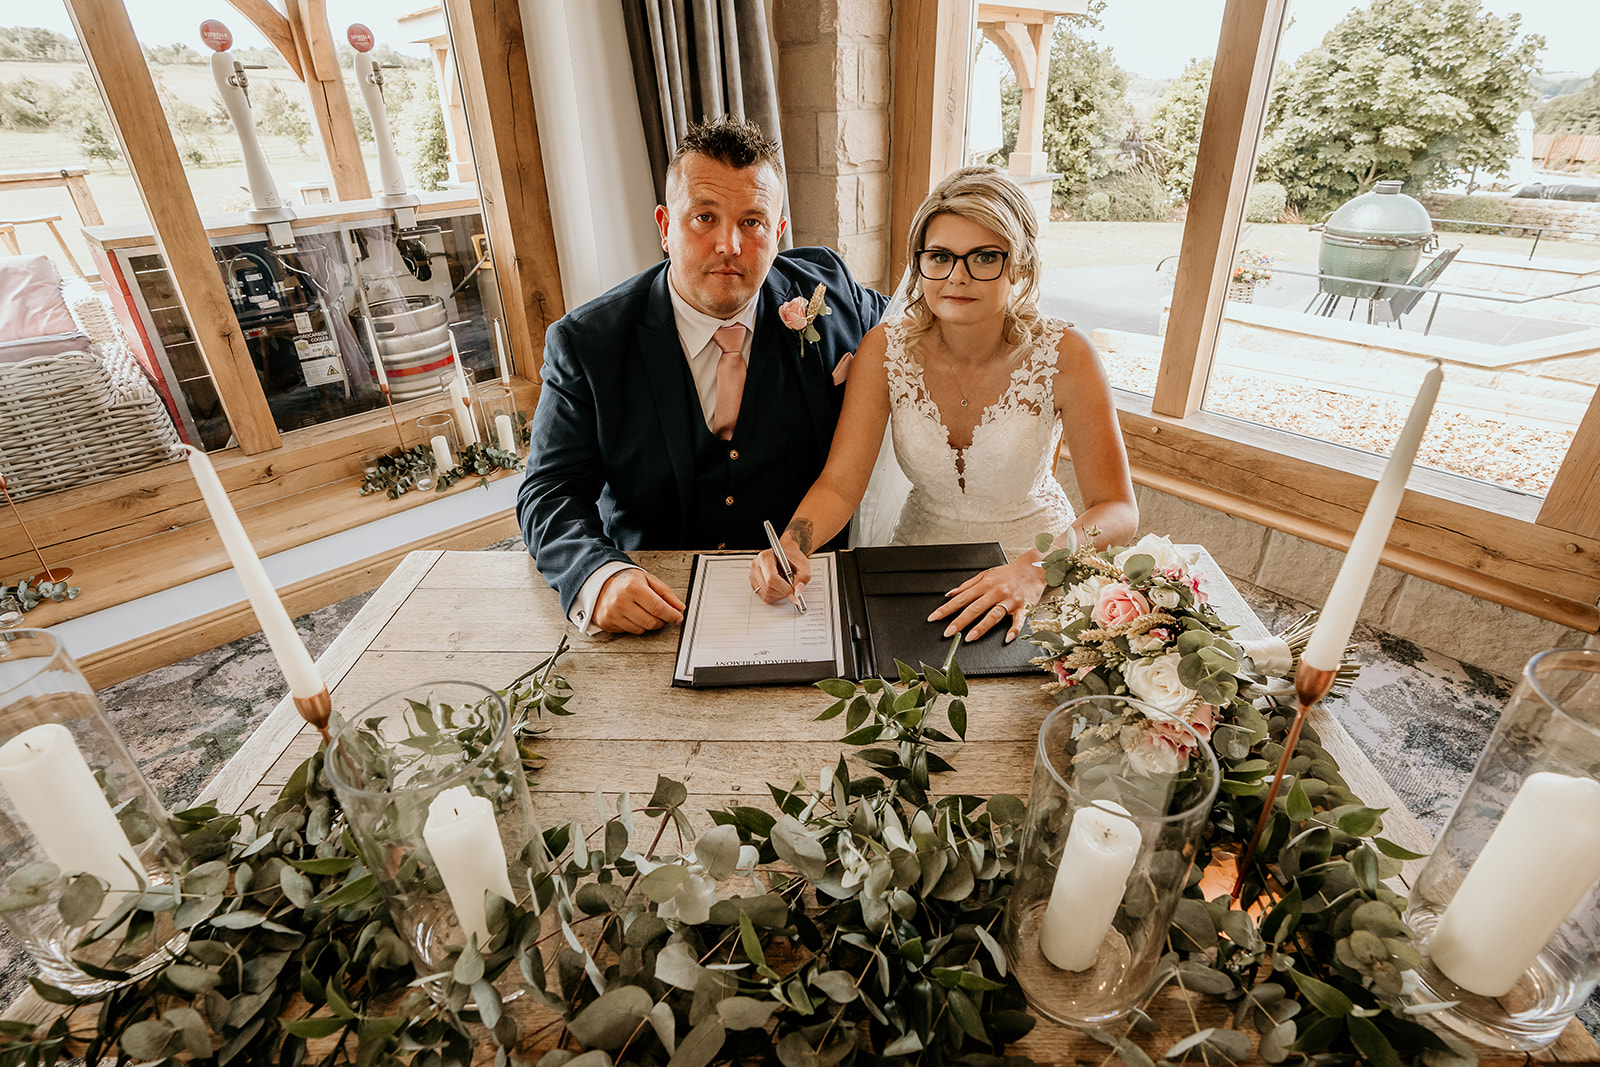 Signing register during wedding day